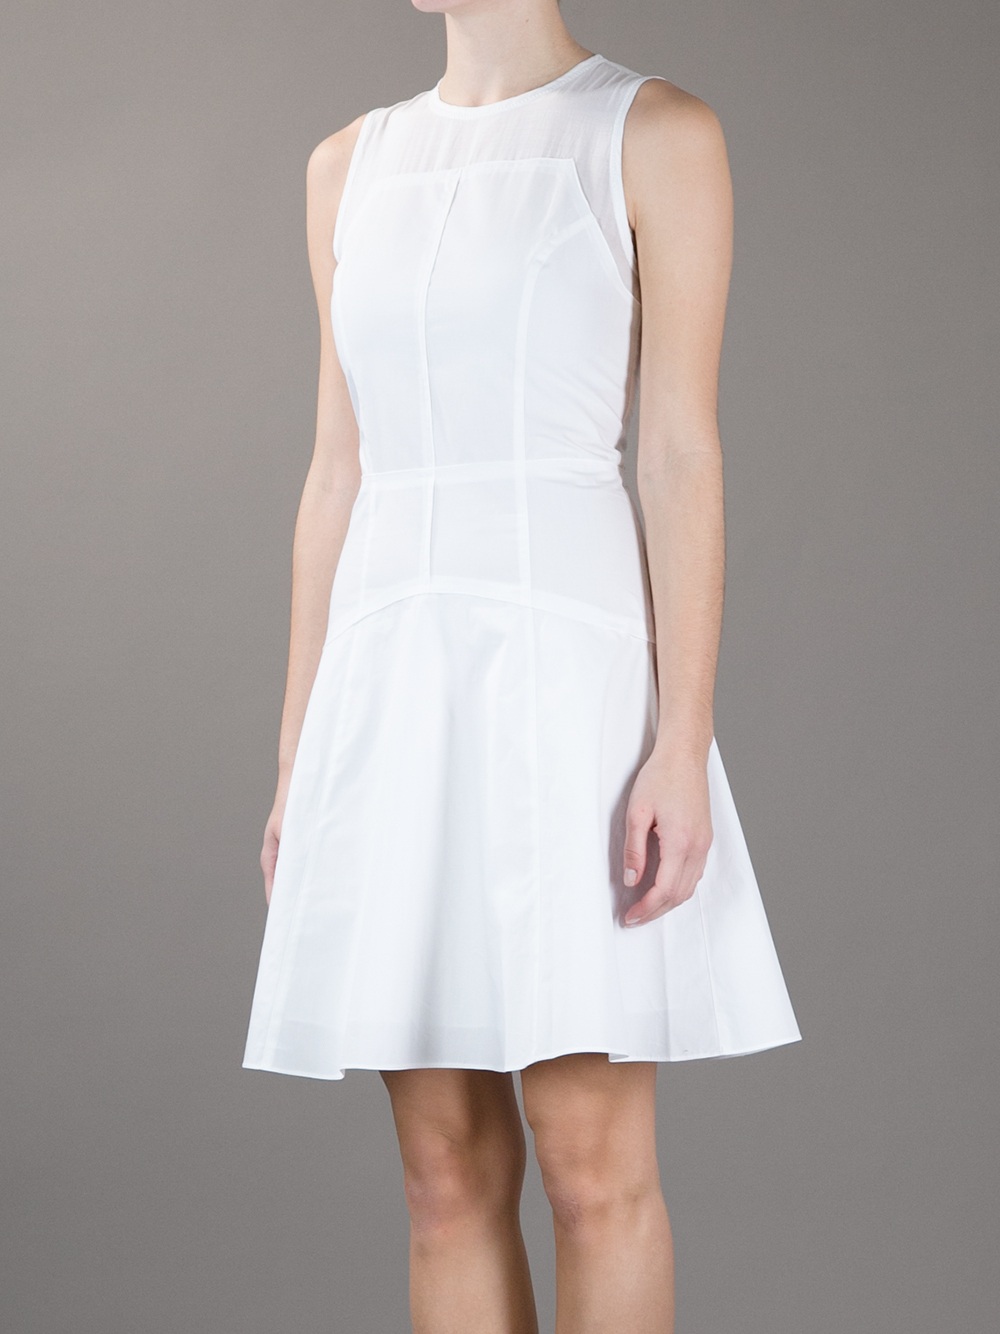 Lyst - Proenza Schouler Aline Dress in White